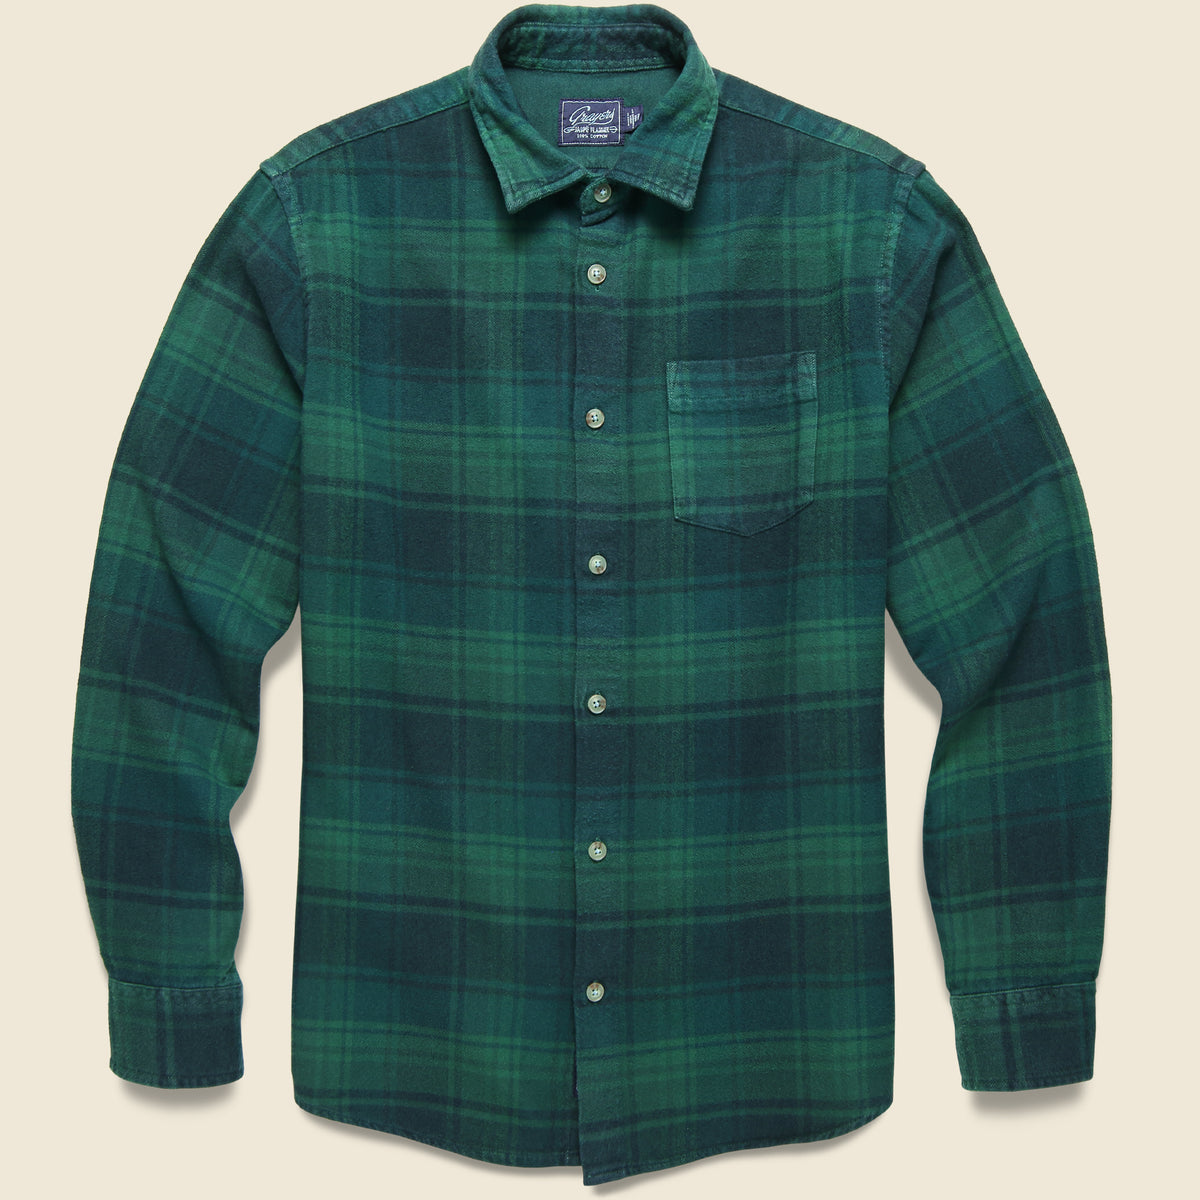 Palisades 3-Ply Jaspe Flannel Shirt - Verdant Green